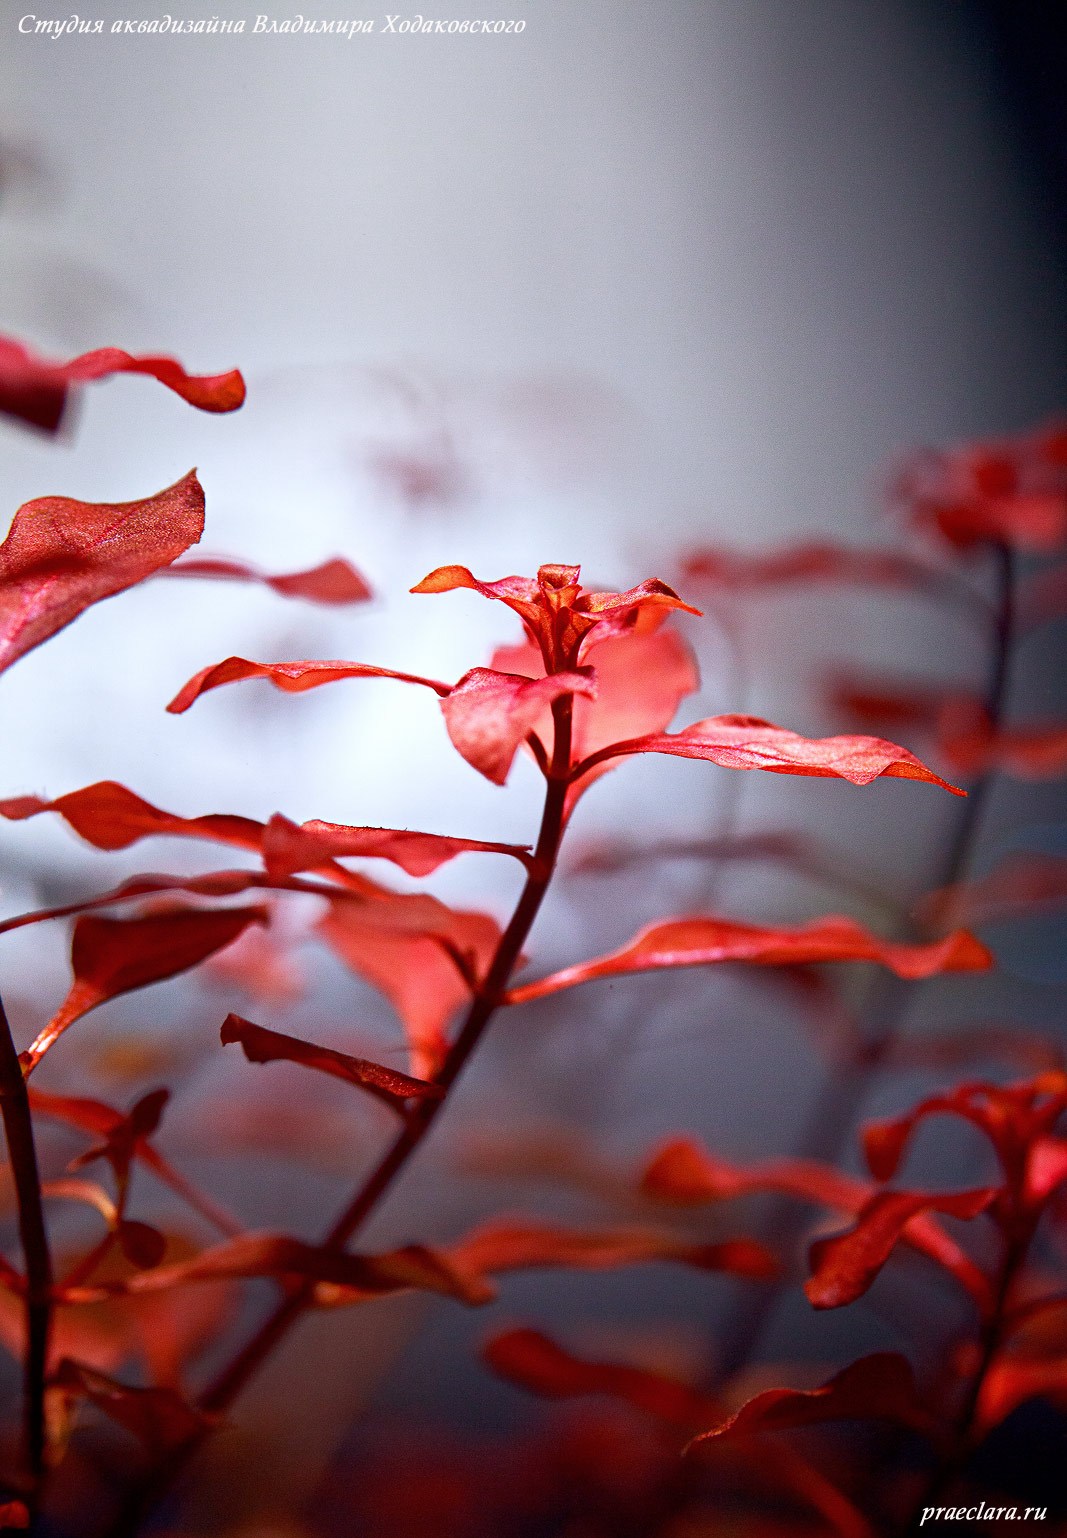 Людвигия супер ред (Ludwigia palustris super red)